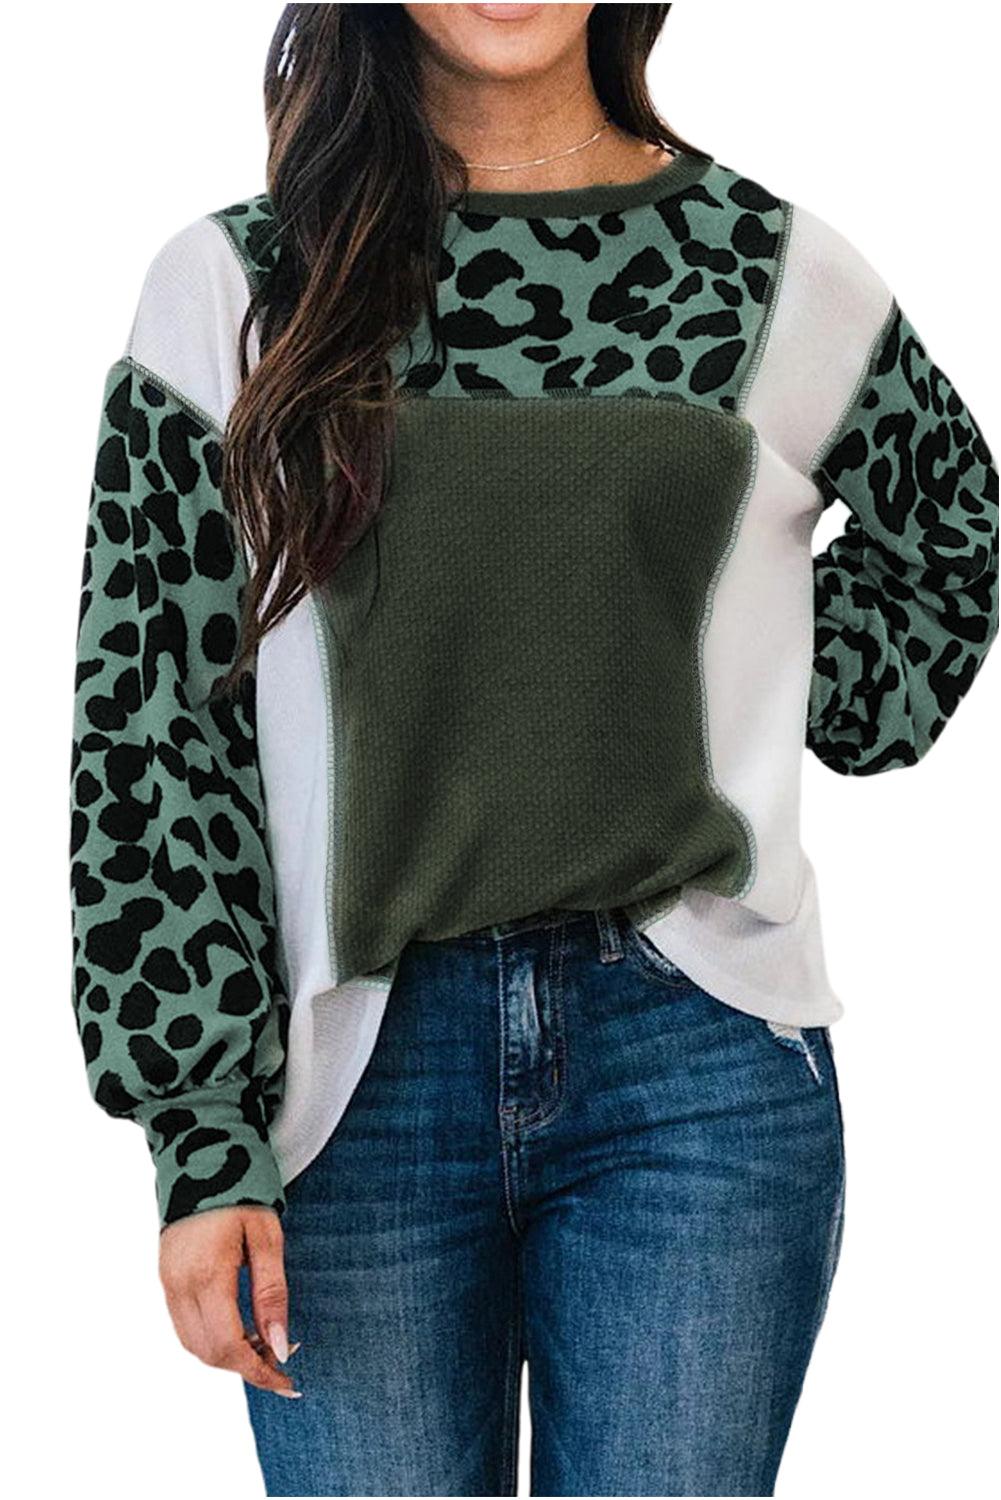 White Leopard Colorblock Patchwork Knit Top - L & M Kee, LLC